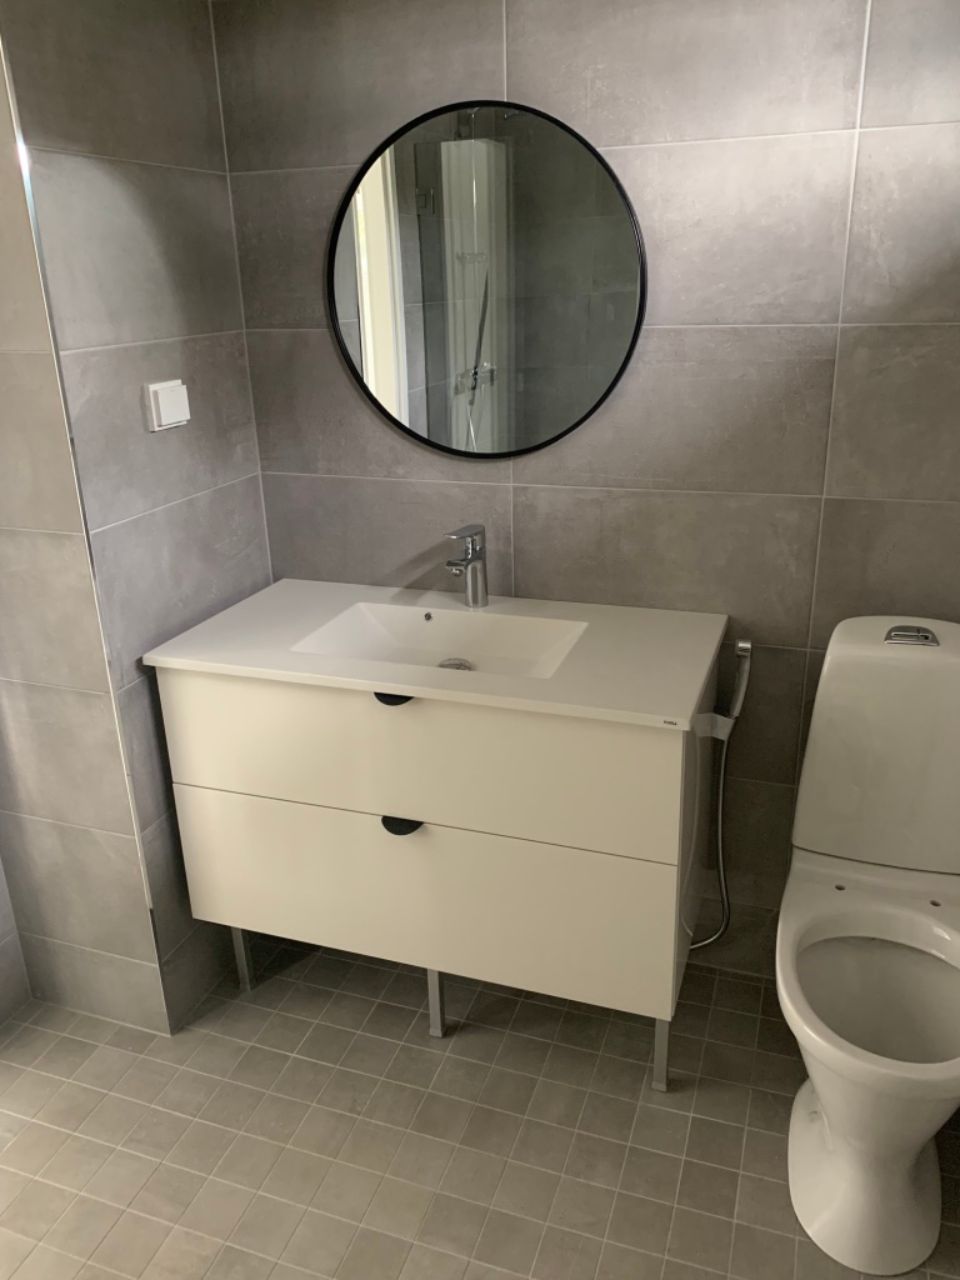 Uusi remontoitu kylpyhuone